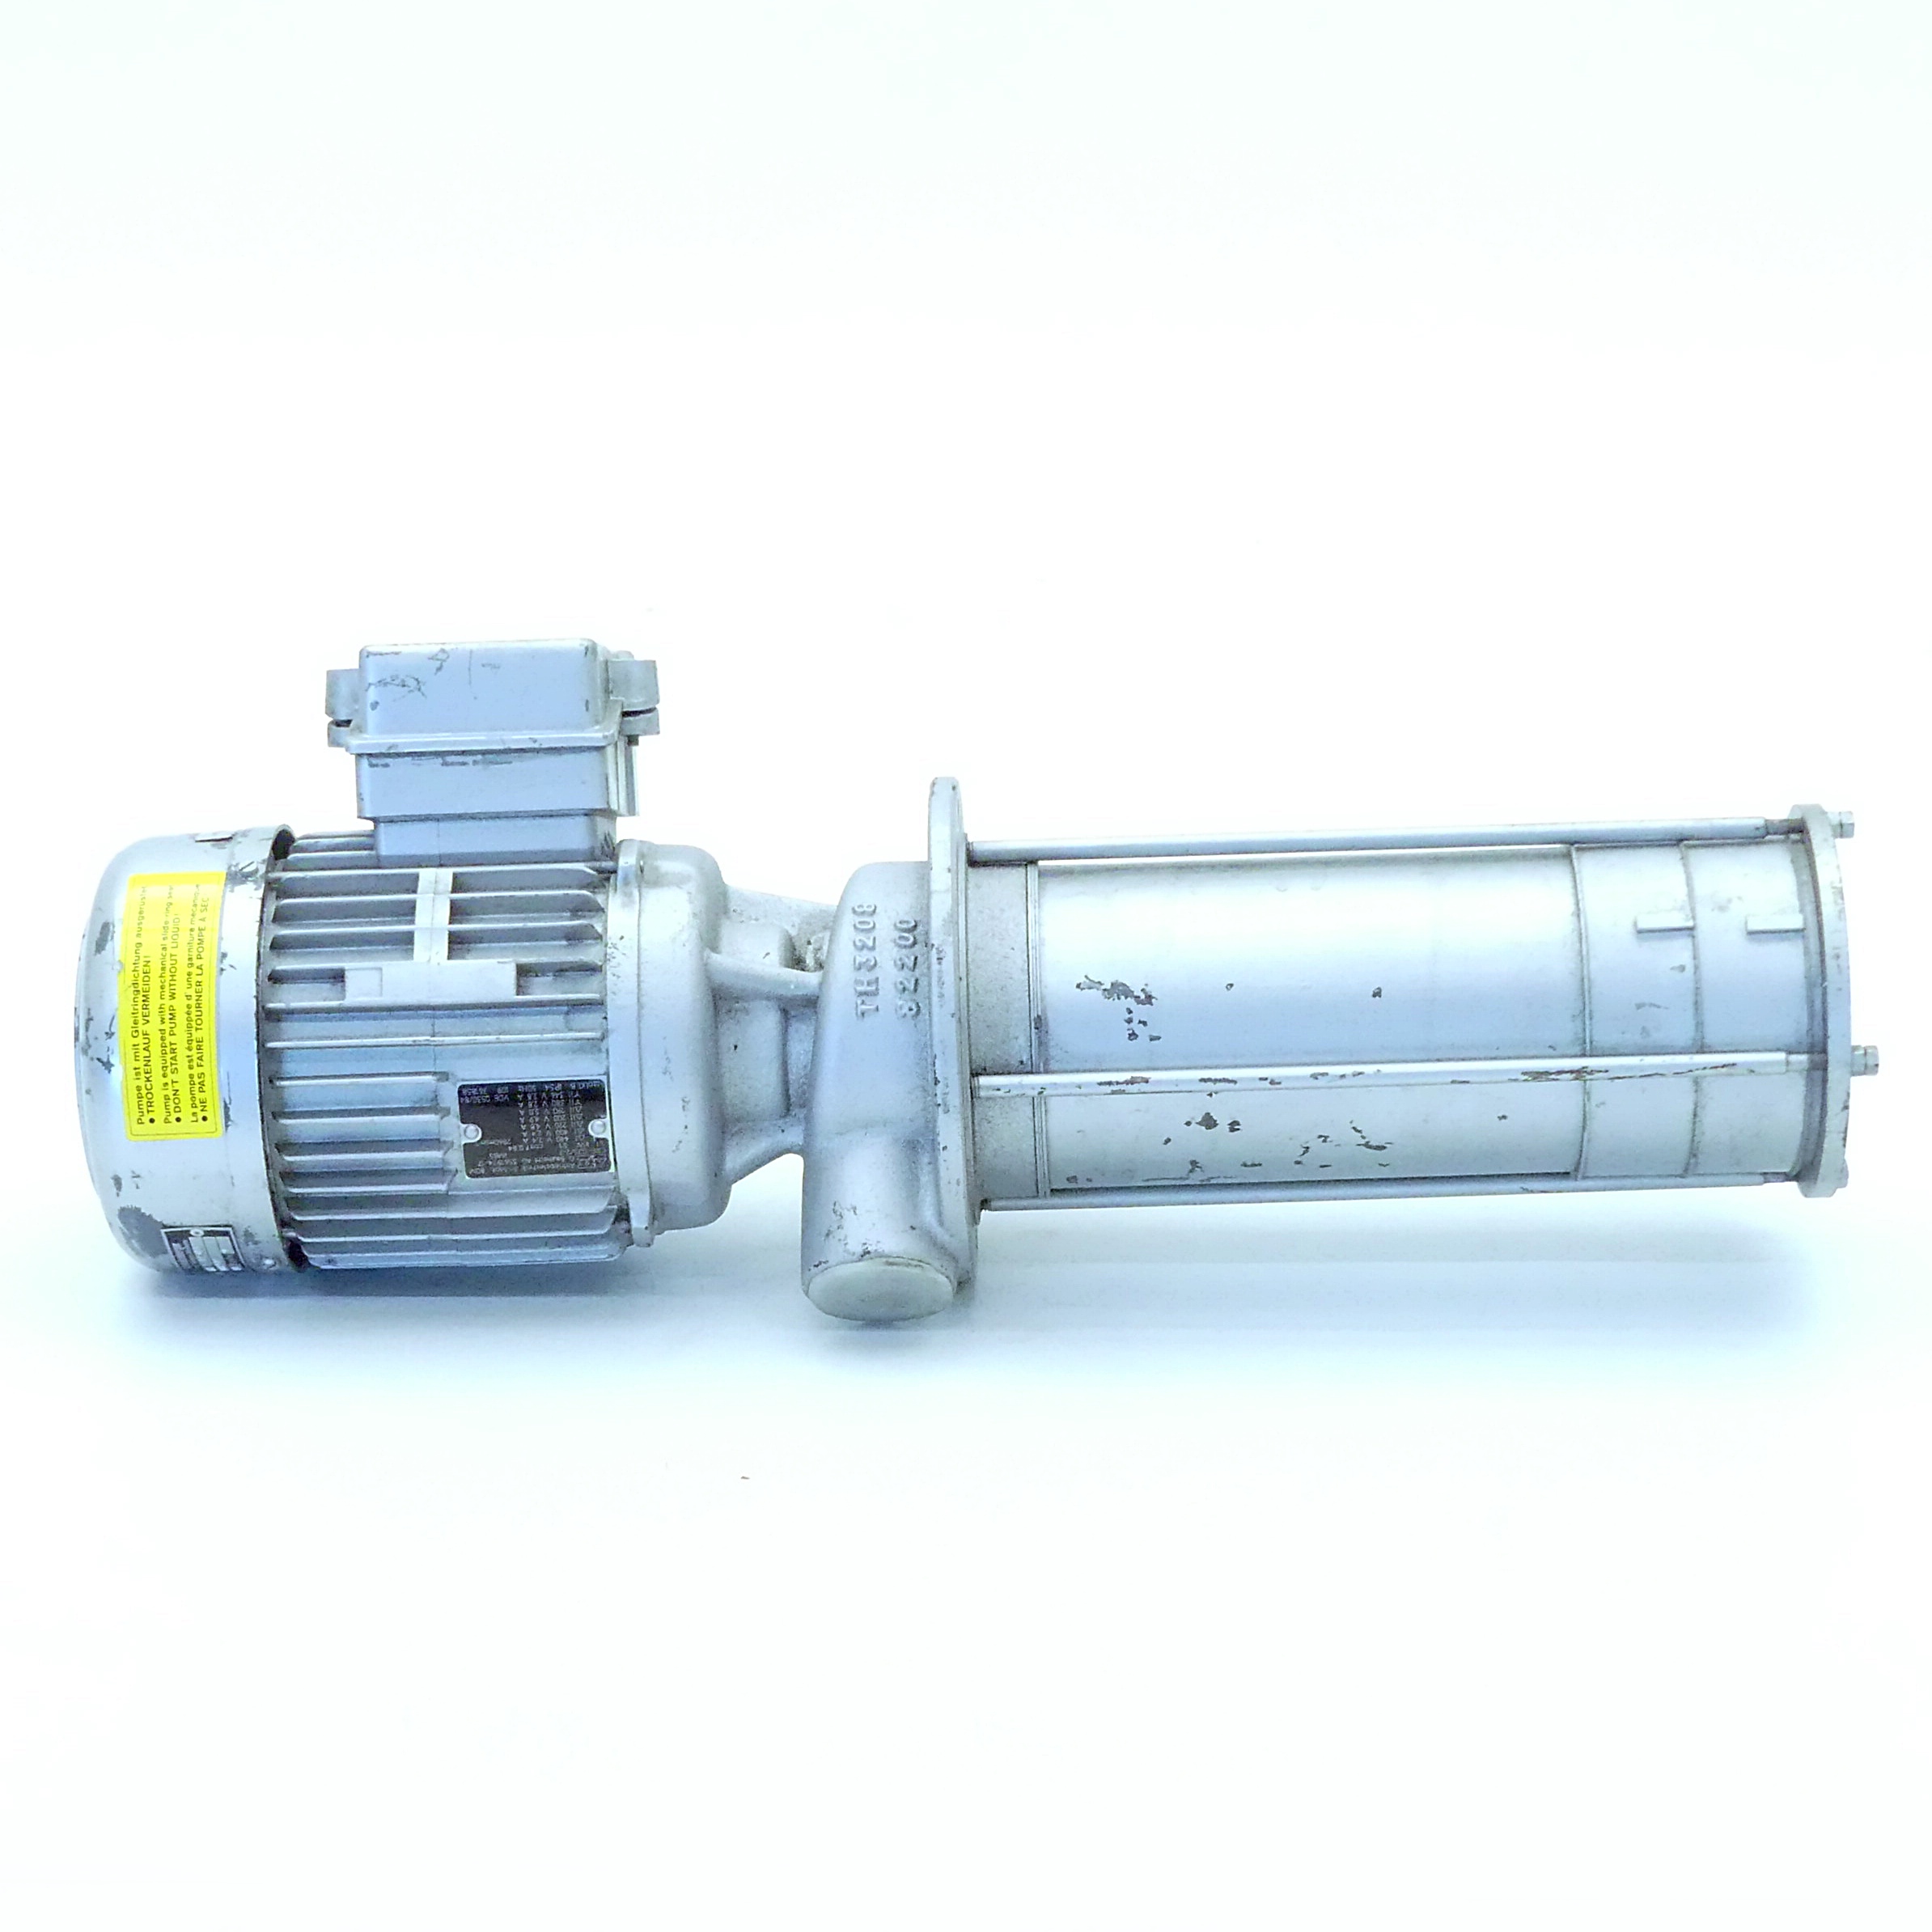 submersible pump VDE 0530/84 